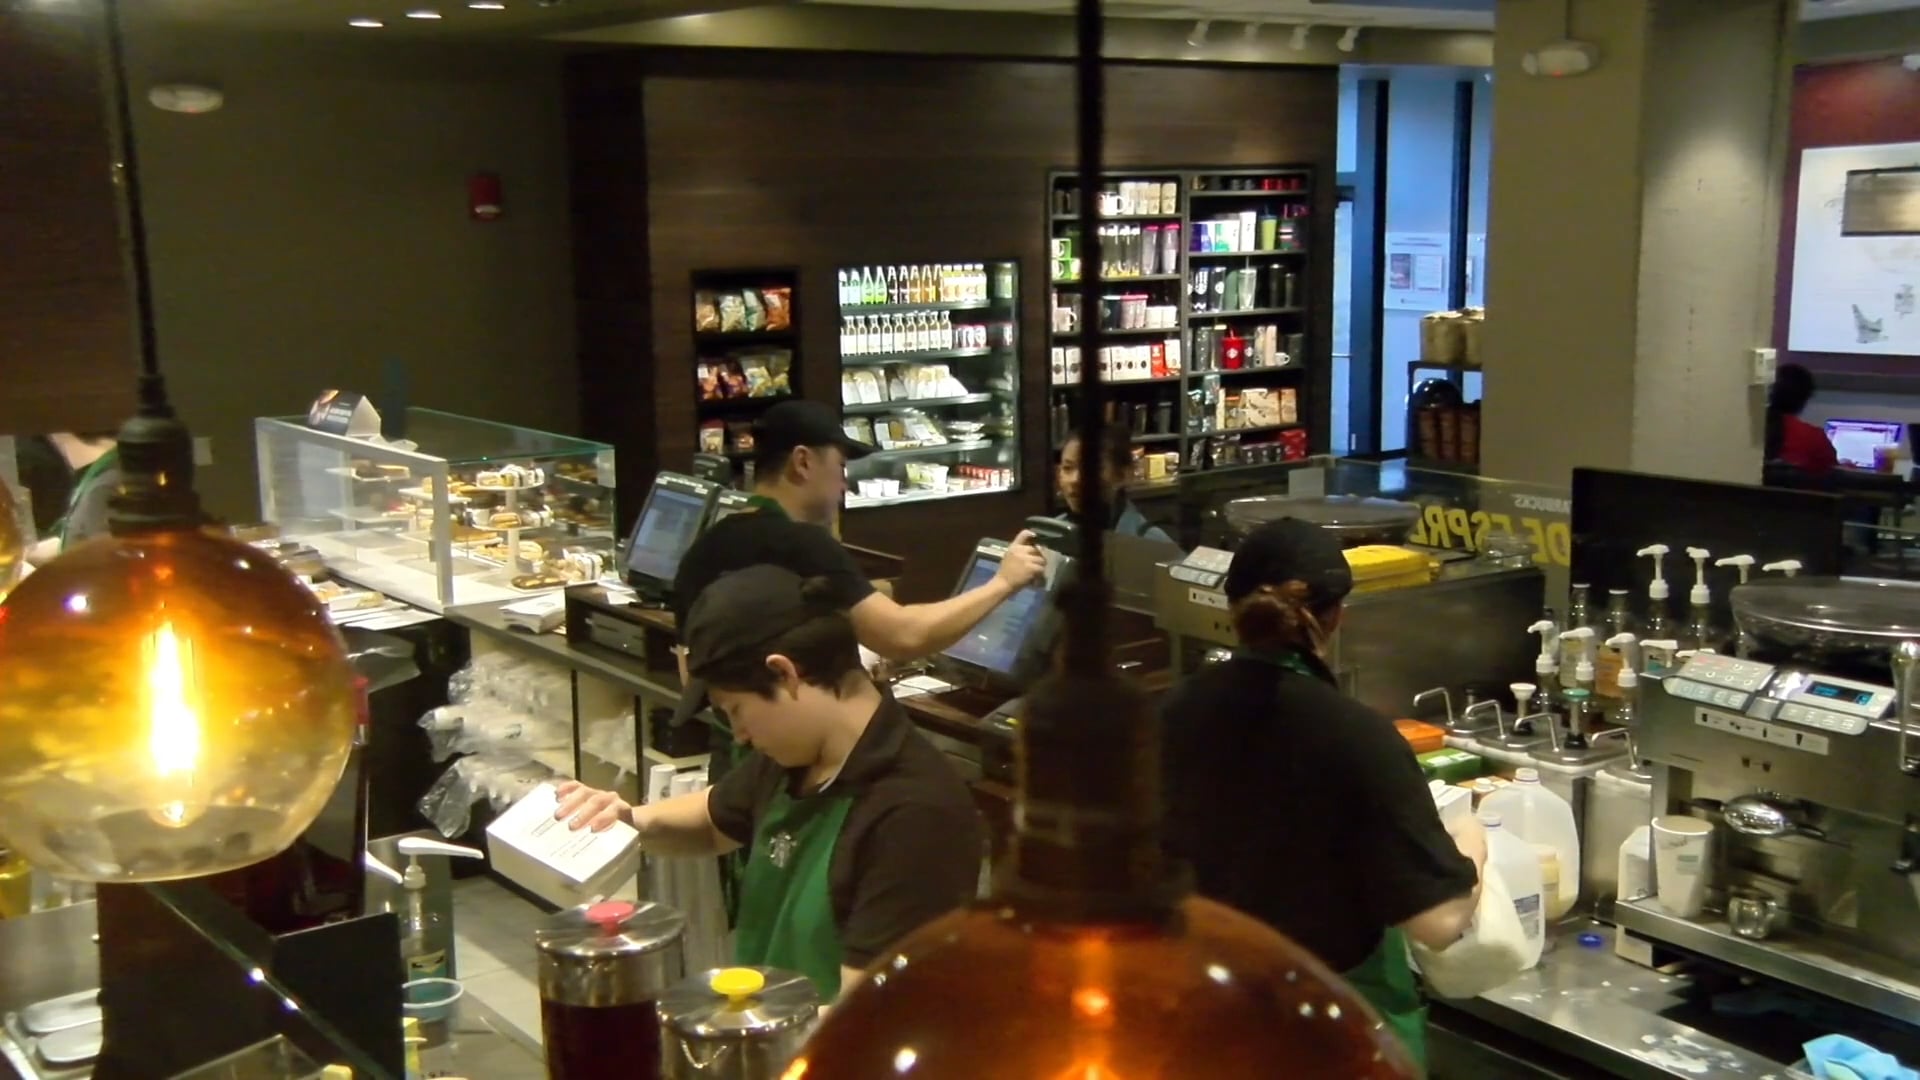 Stony Brook Newscast: Get App at Starbucks